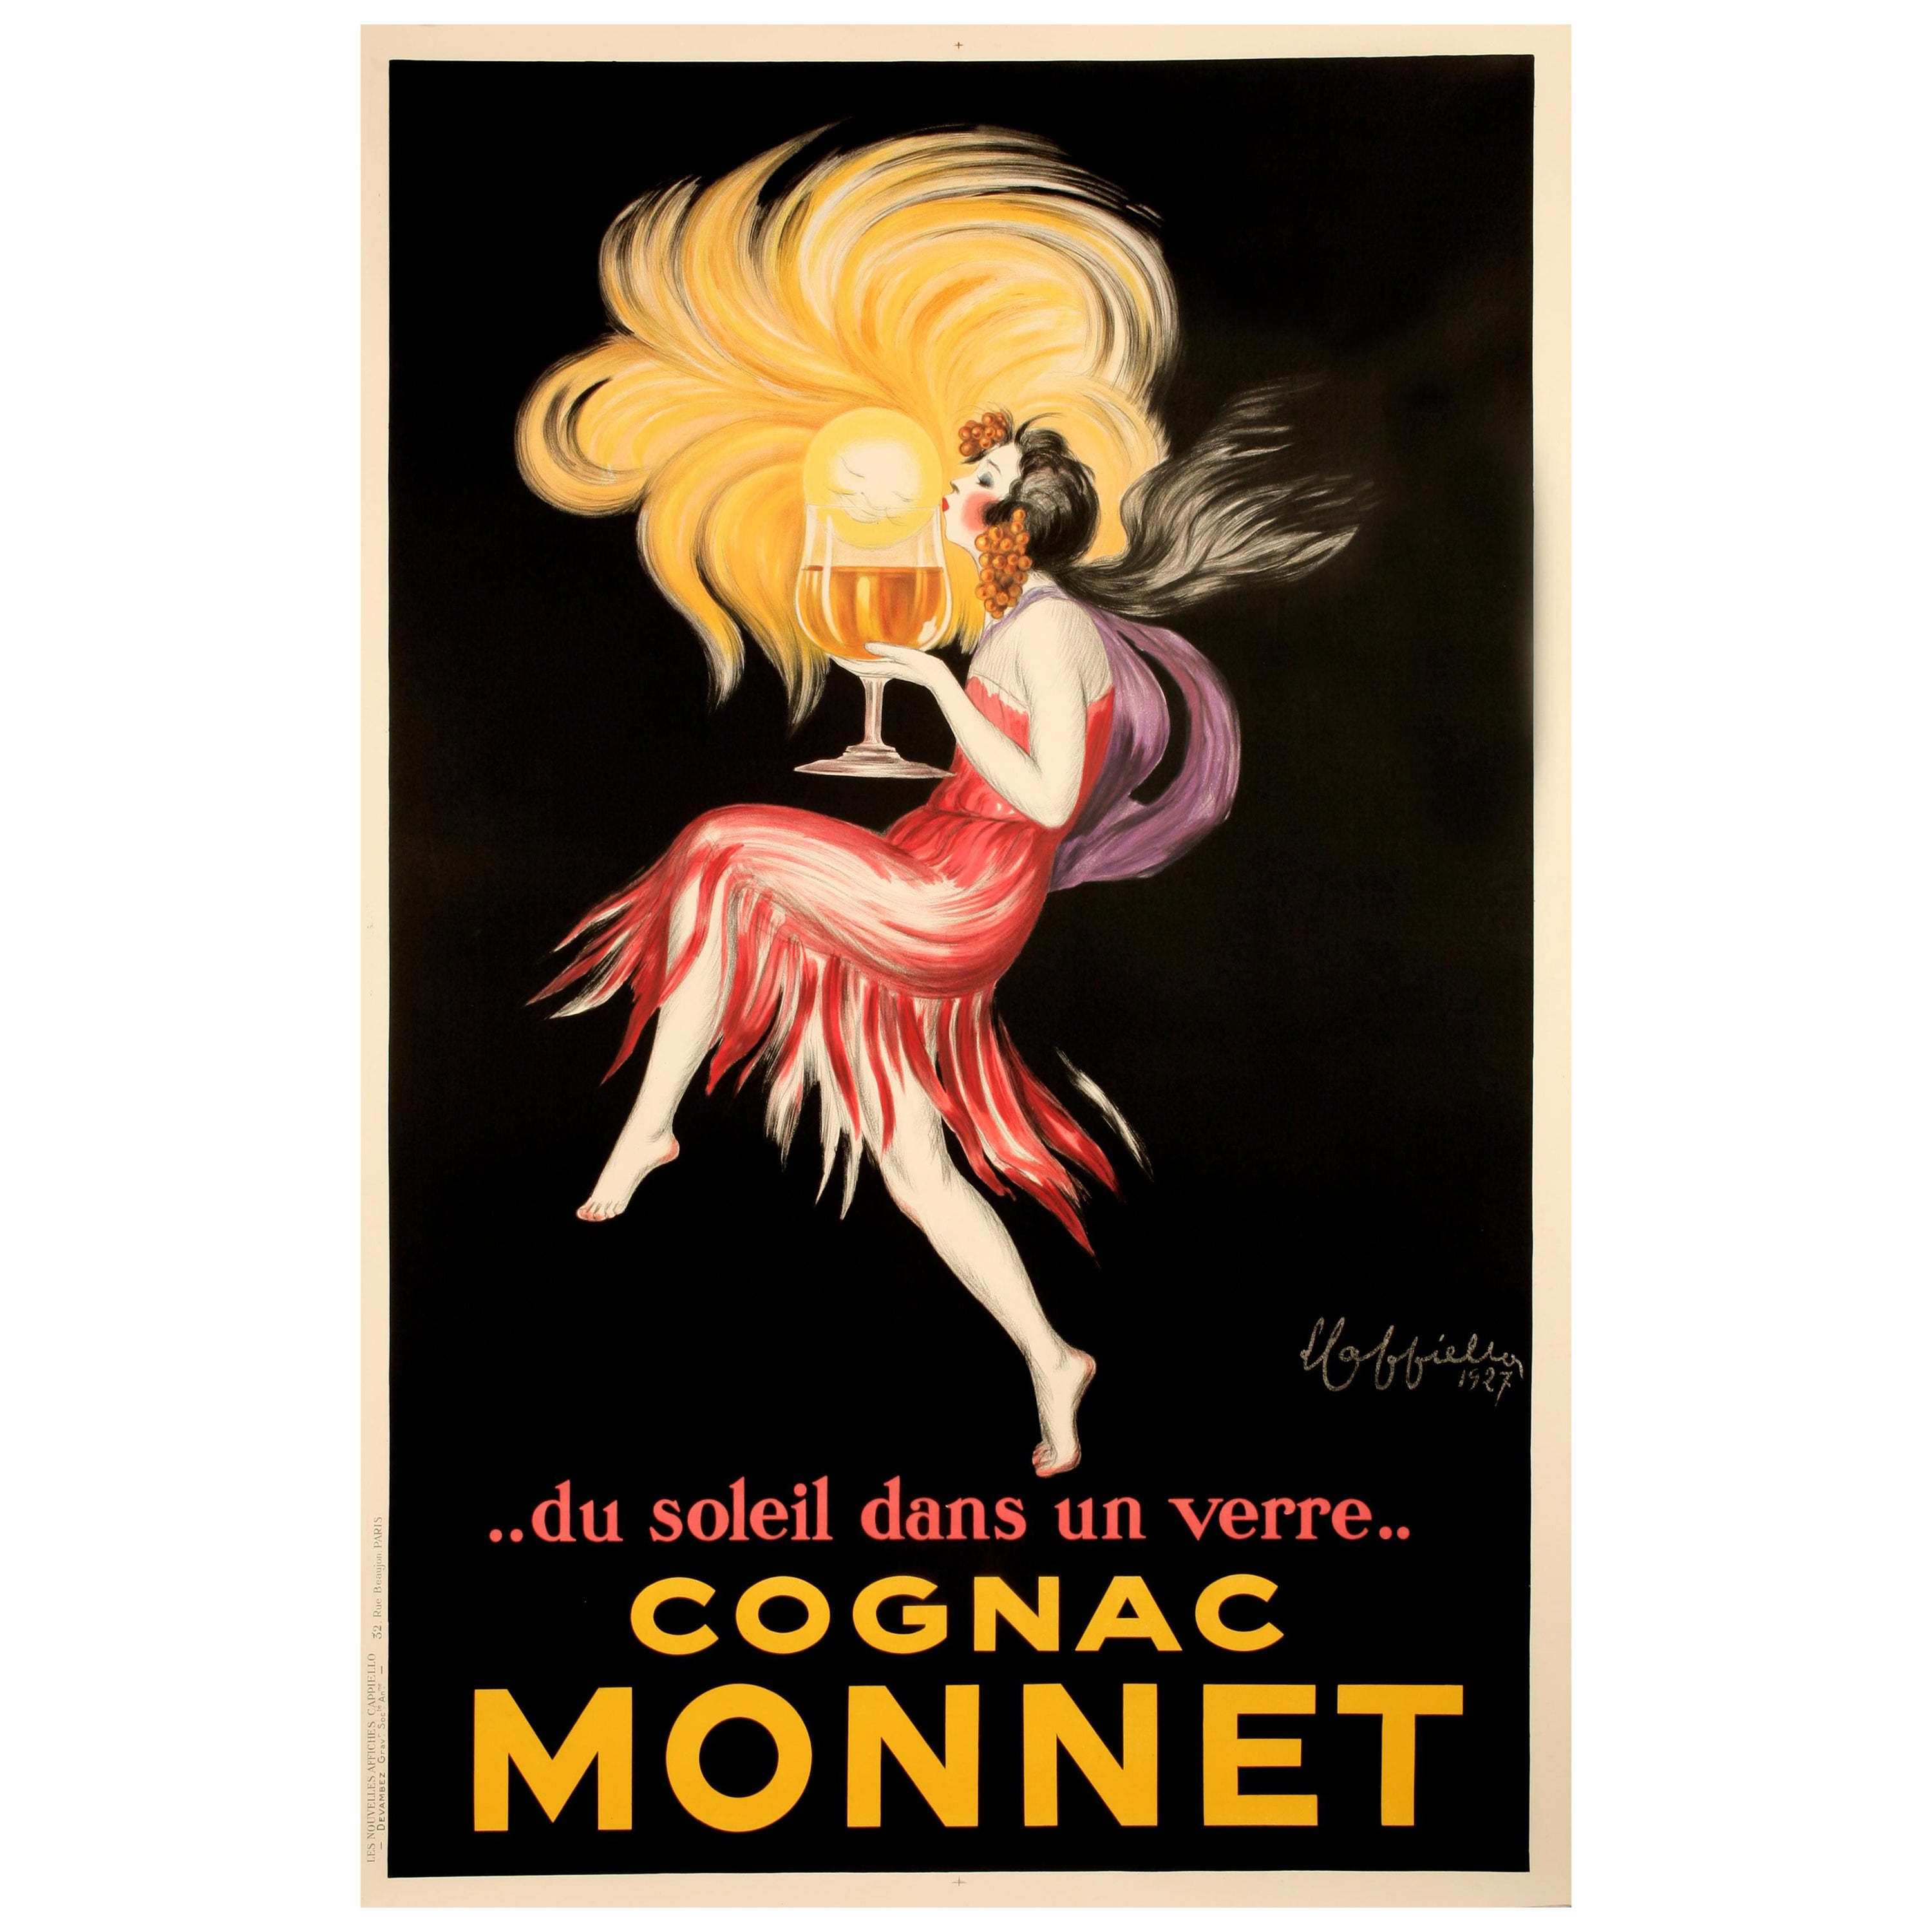 Cappiello, Original Alcohol Poster, Cognac Monnet, Salamander, Liquor, Sun, 1927